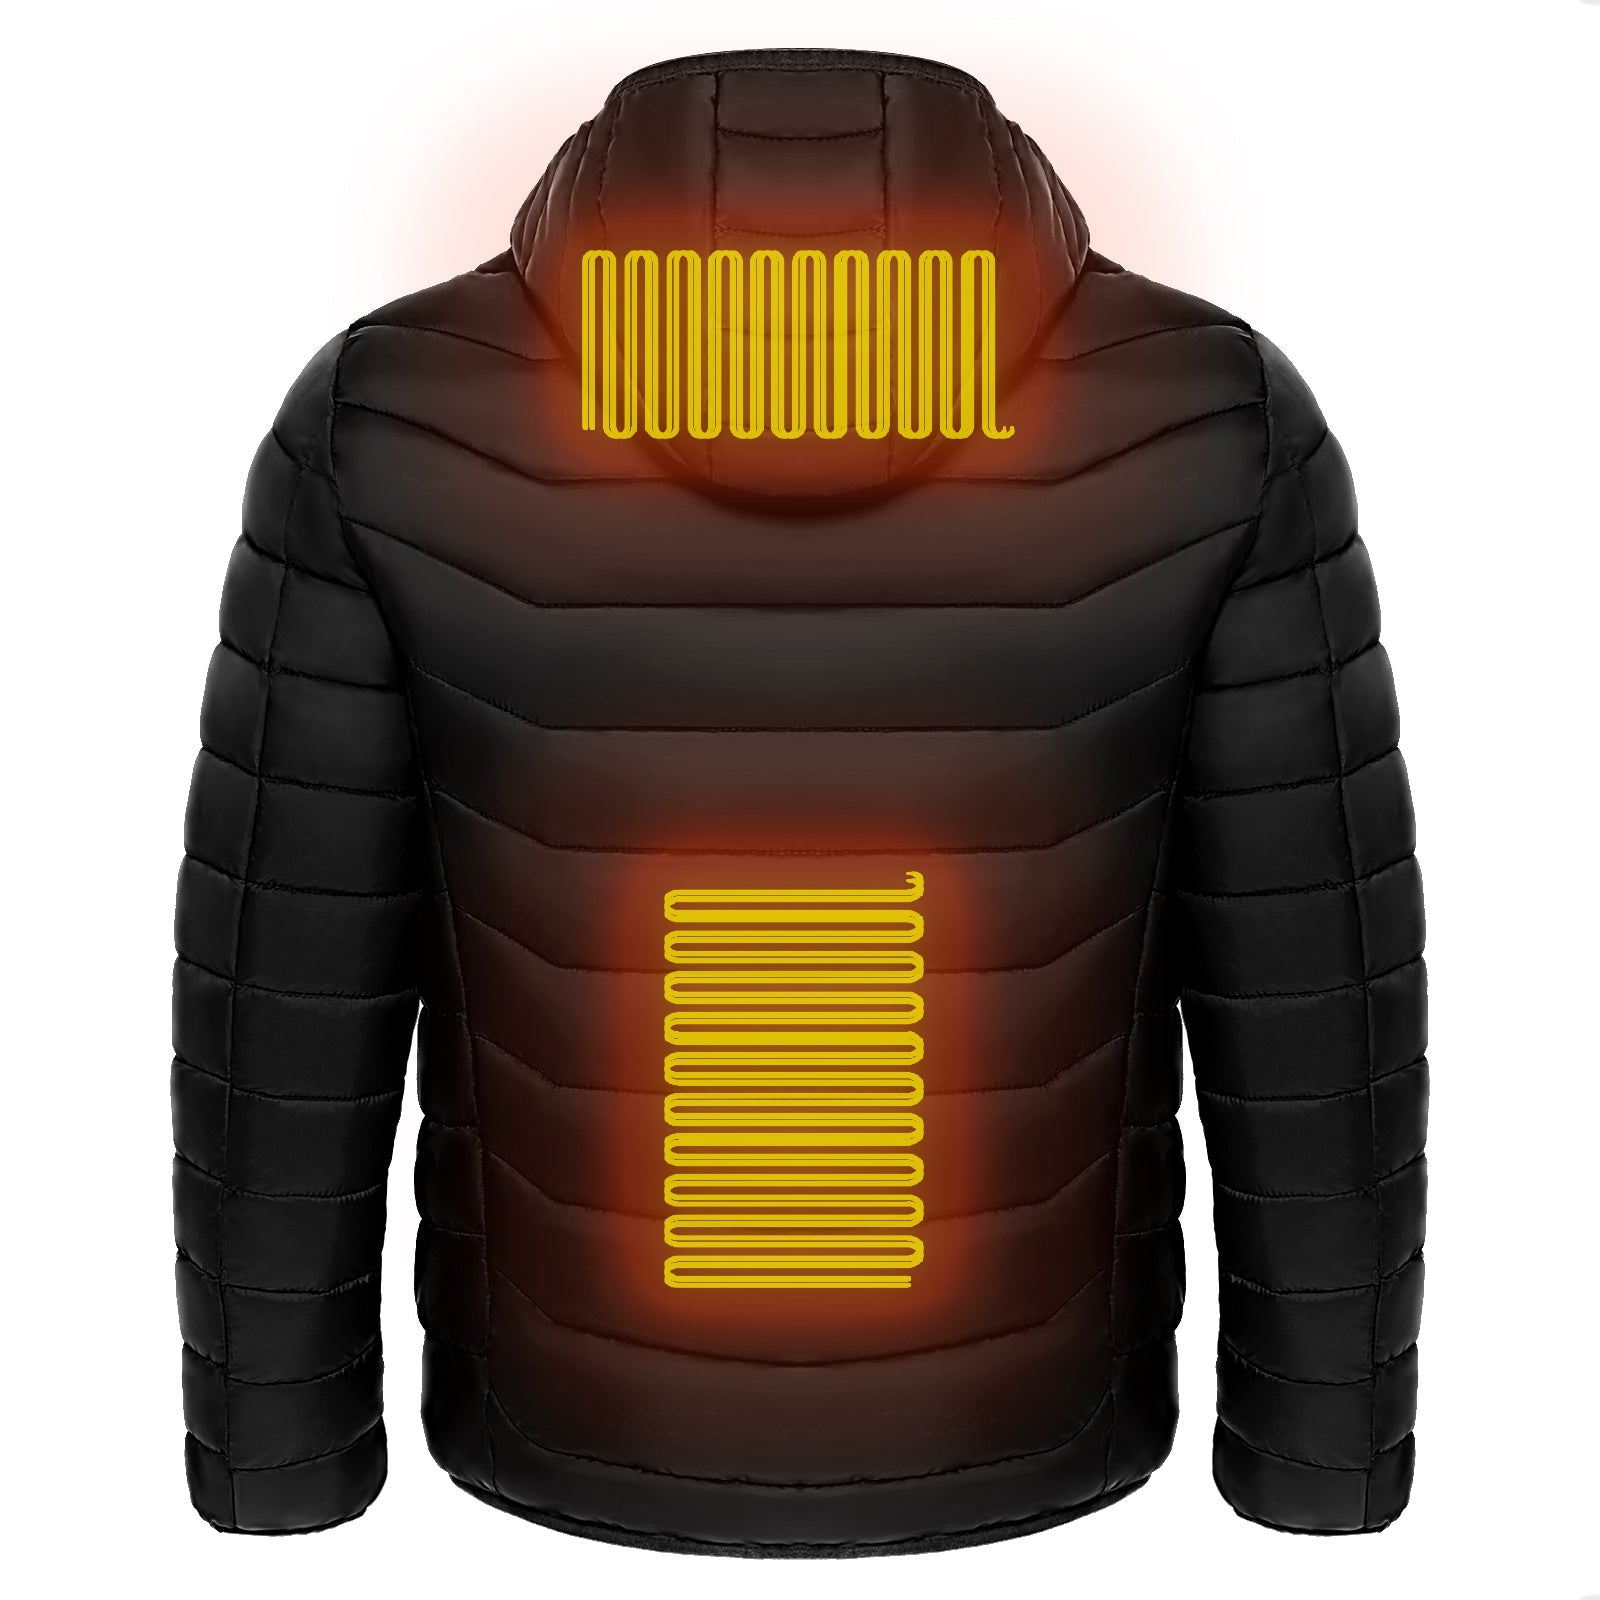 HOOR Heated Puffer Jacket